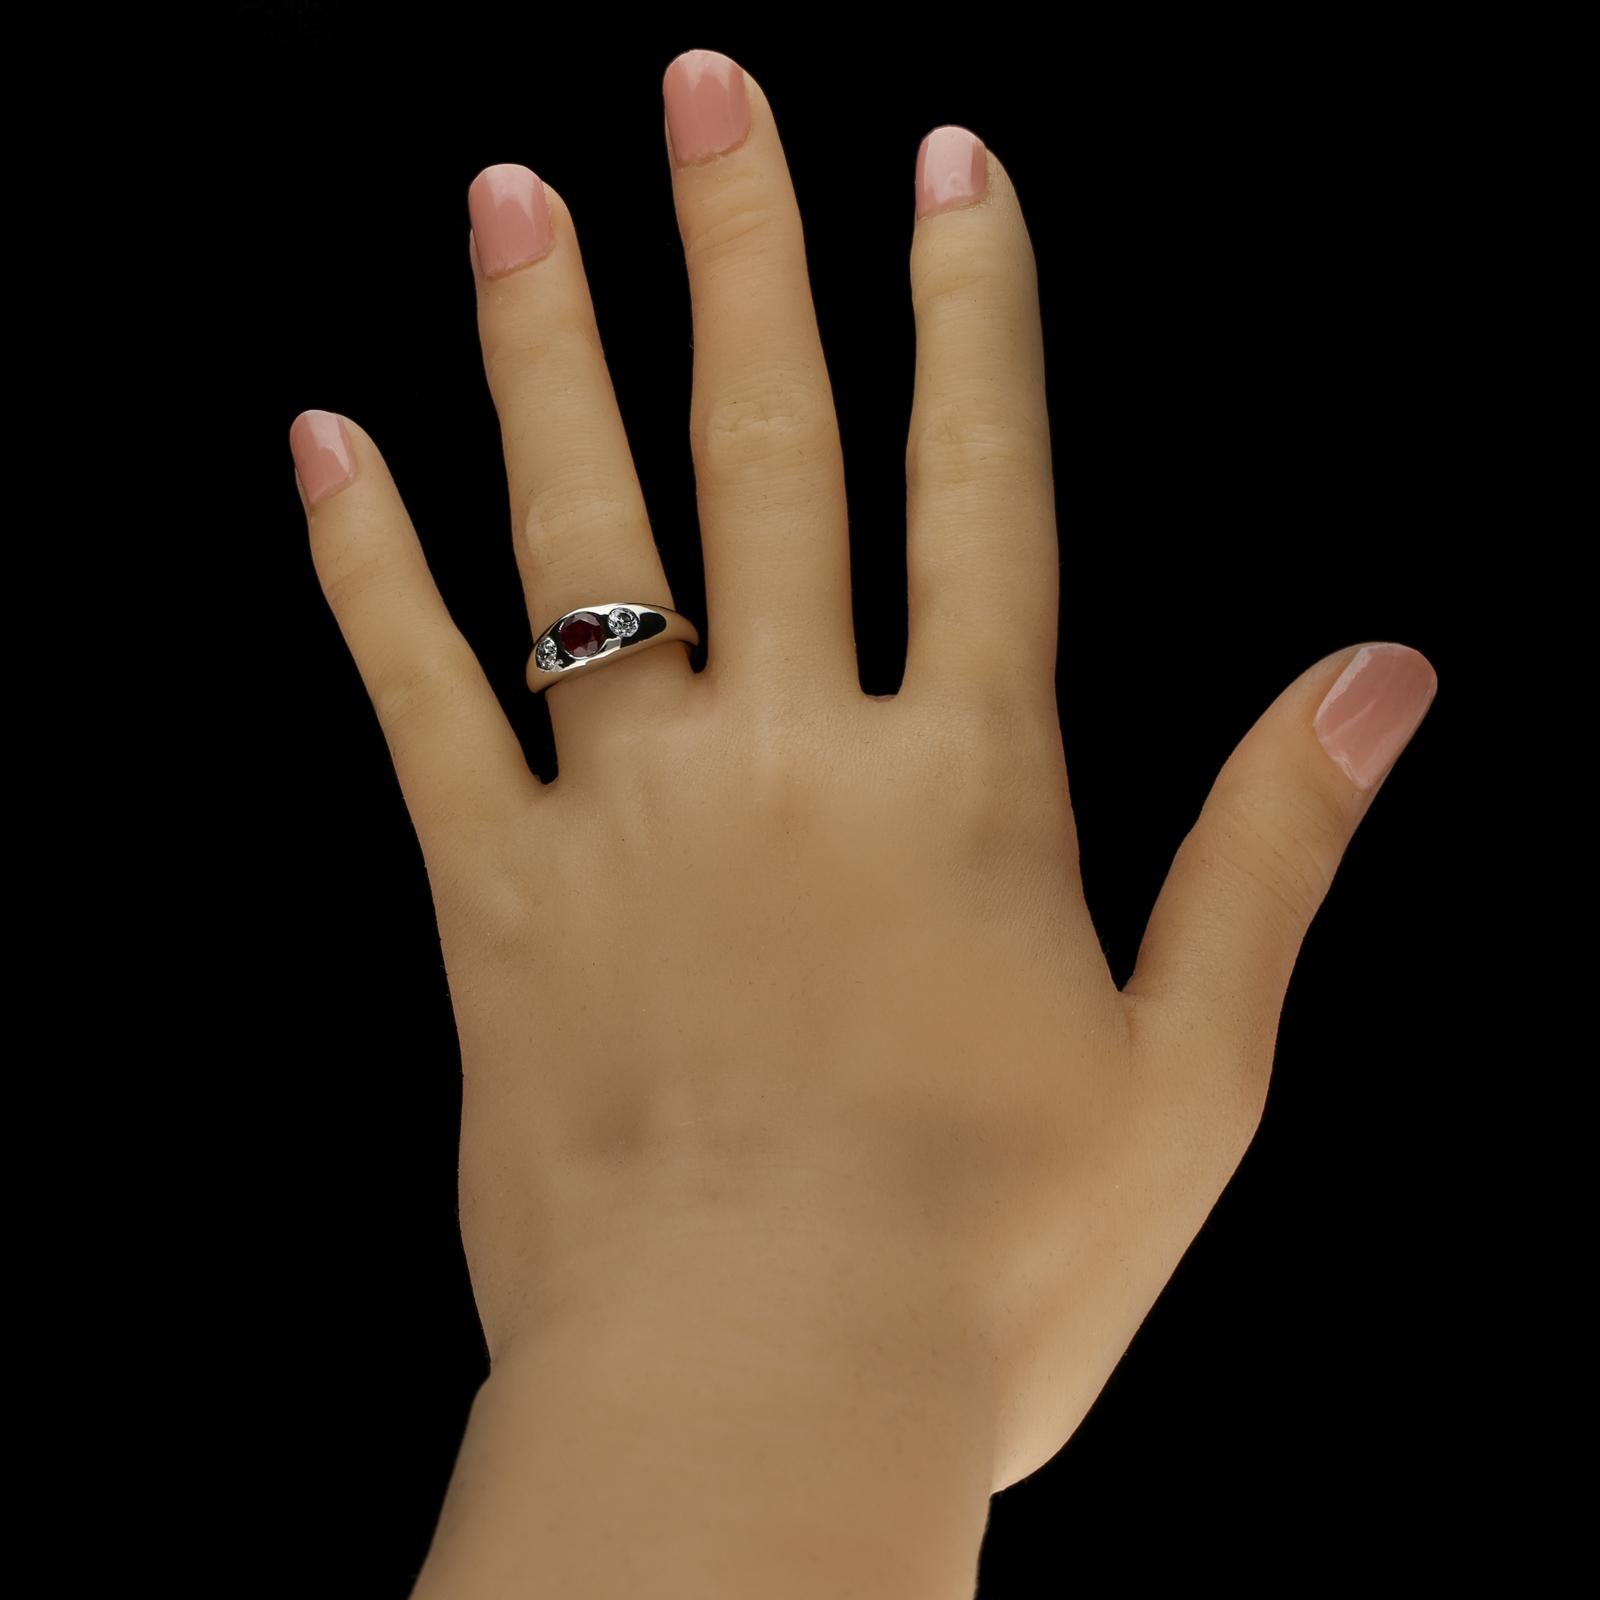 size 11 finger